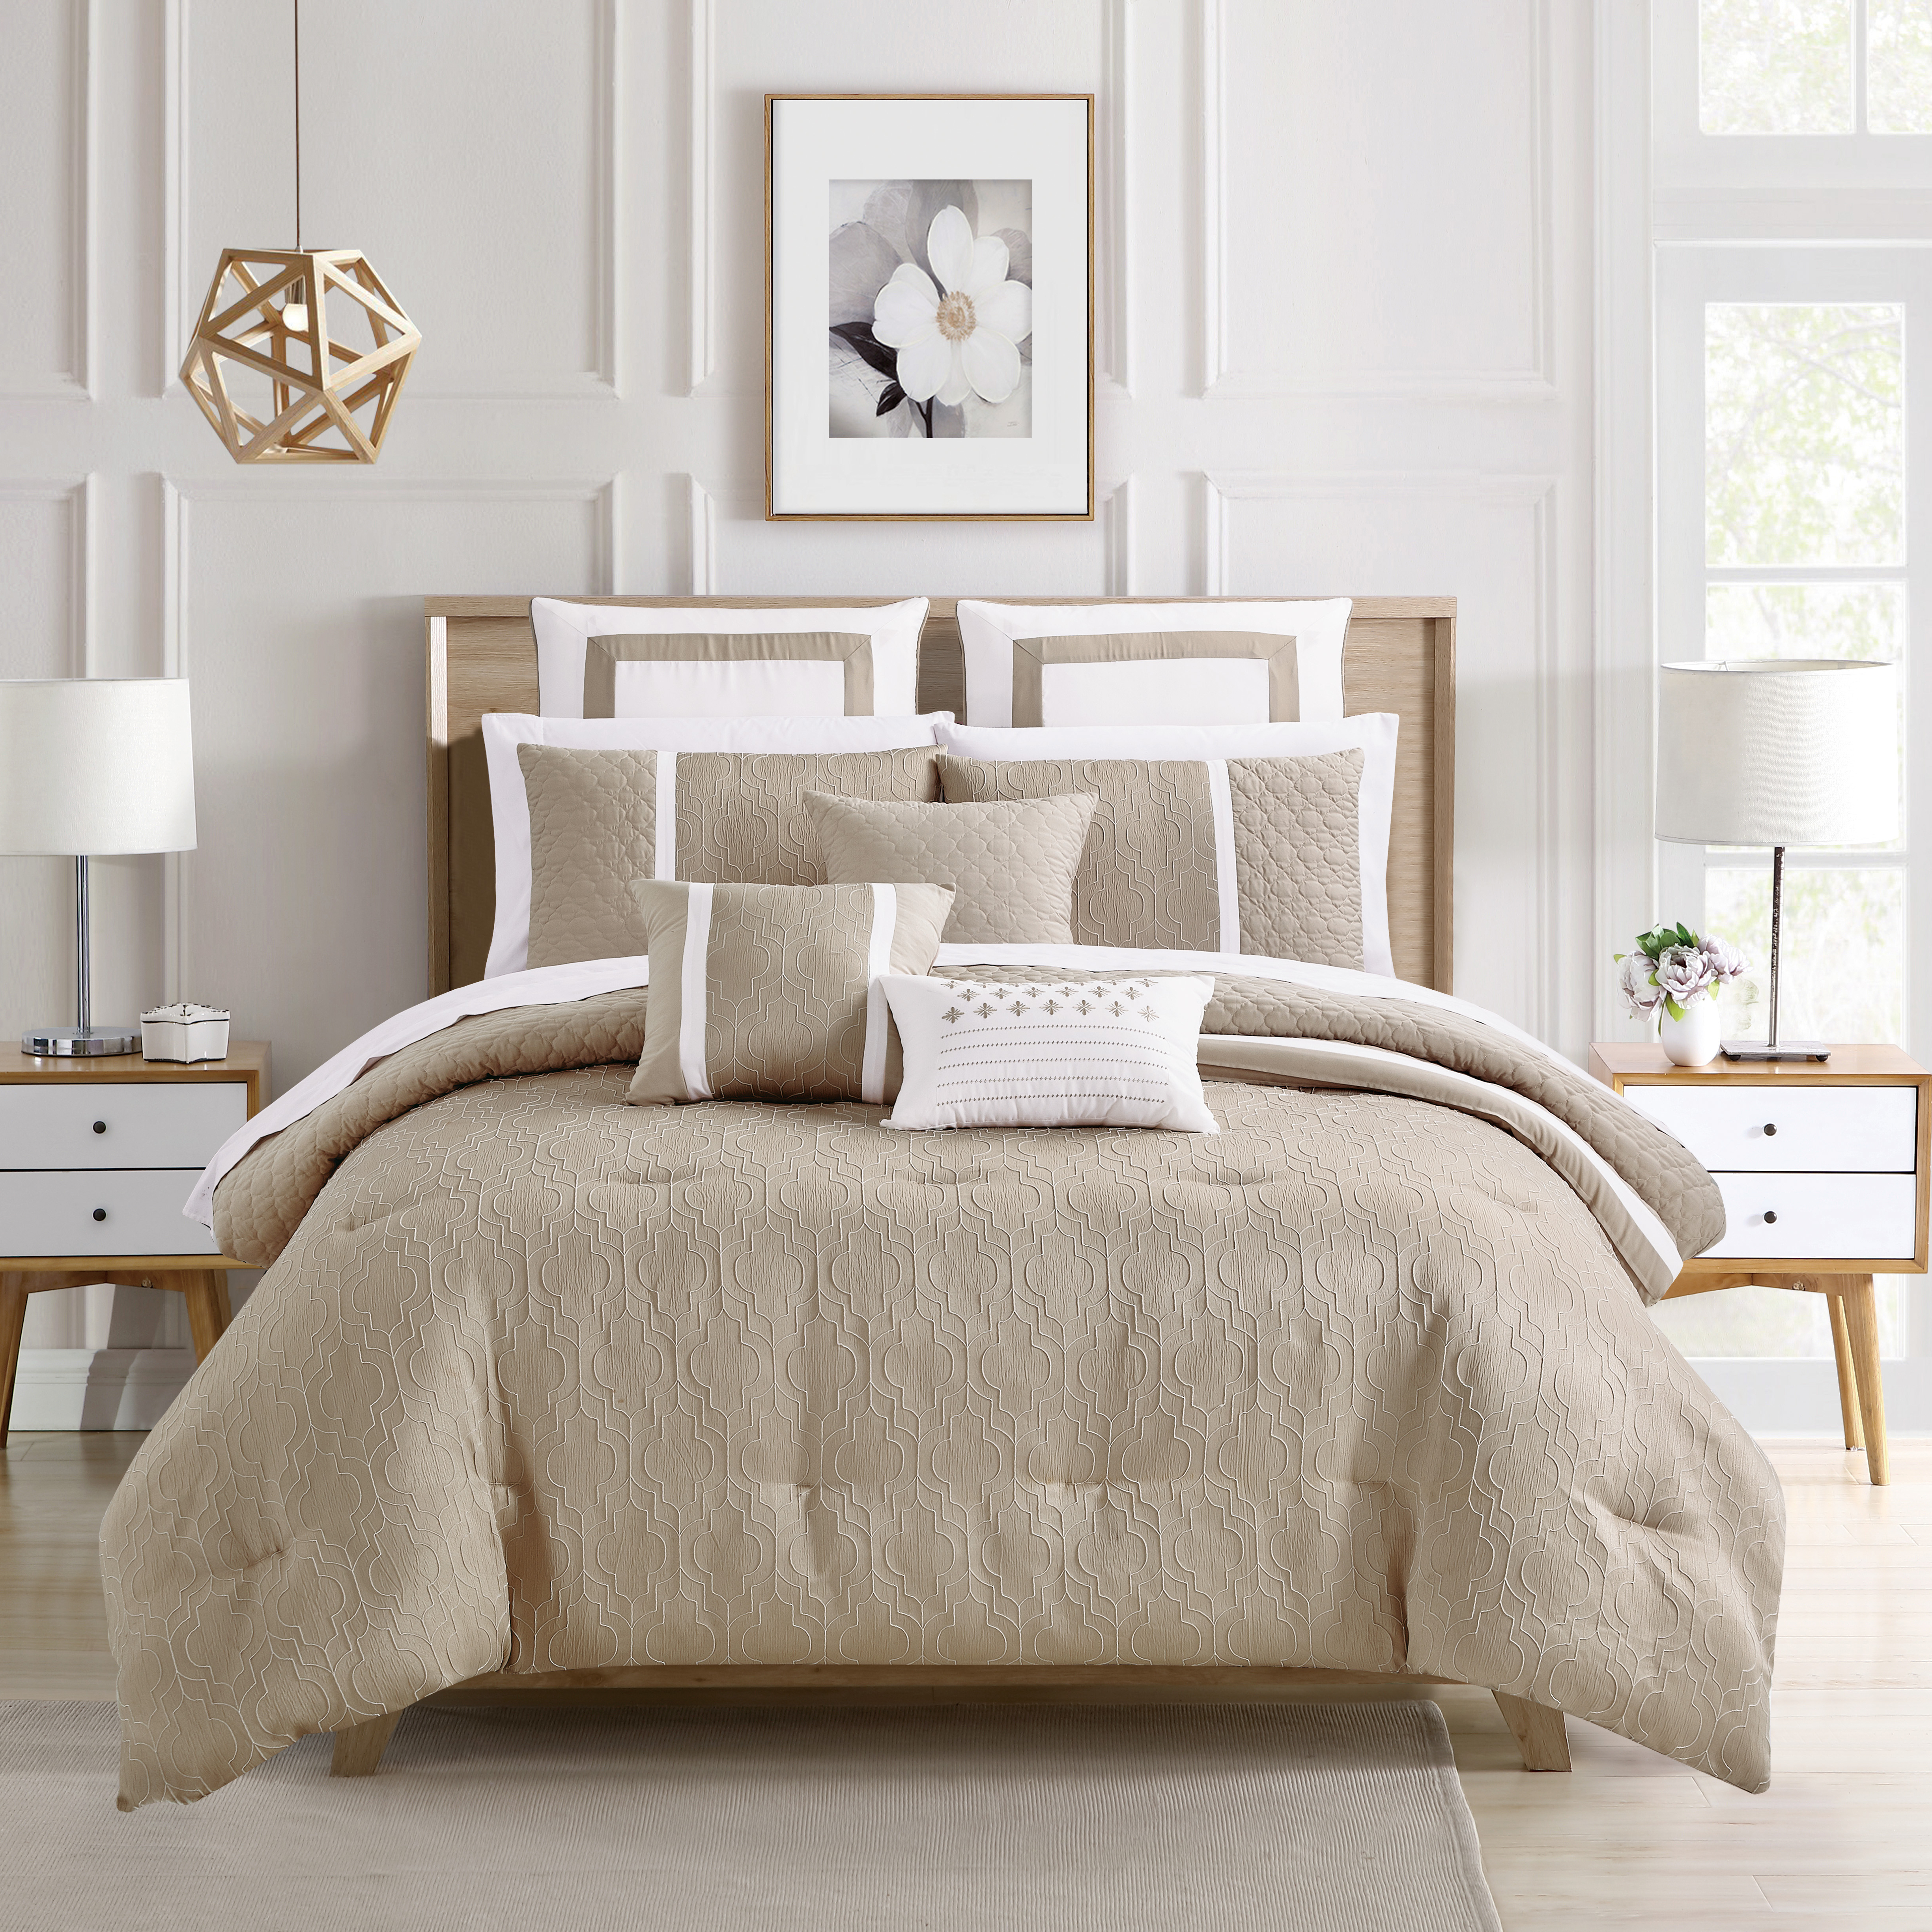 Arlow 8 Piece Comforter Set Jacquard Geometric Quilted Pattern Design Bedding - Grey, Queen